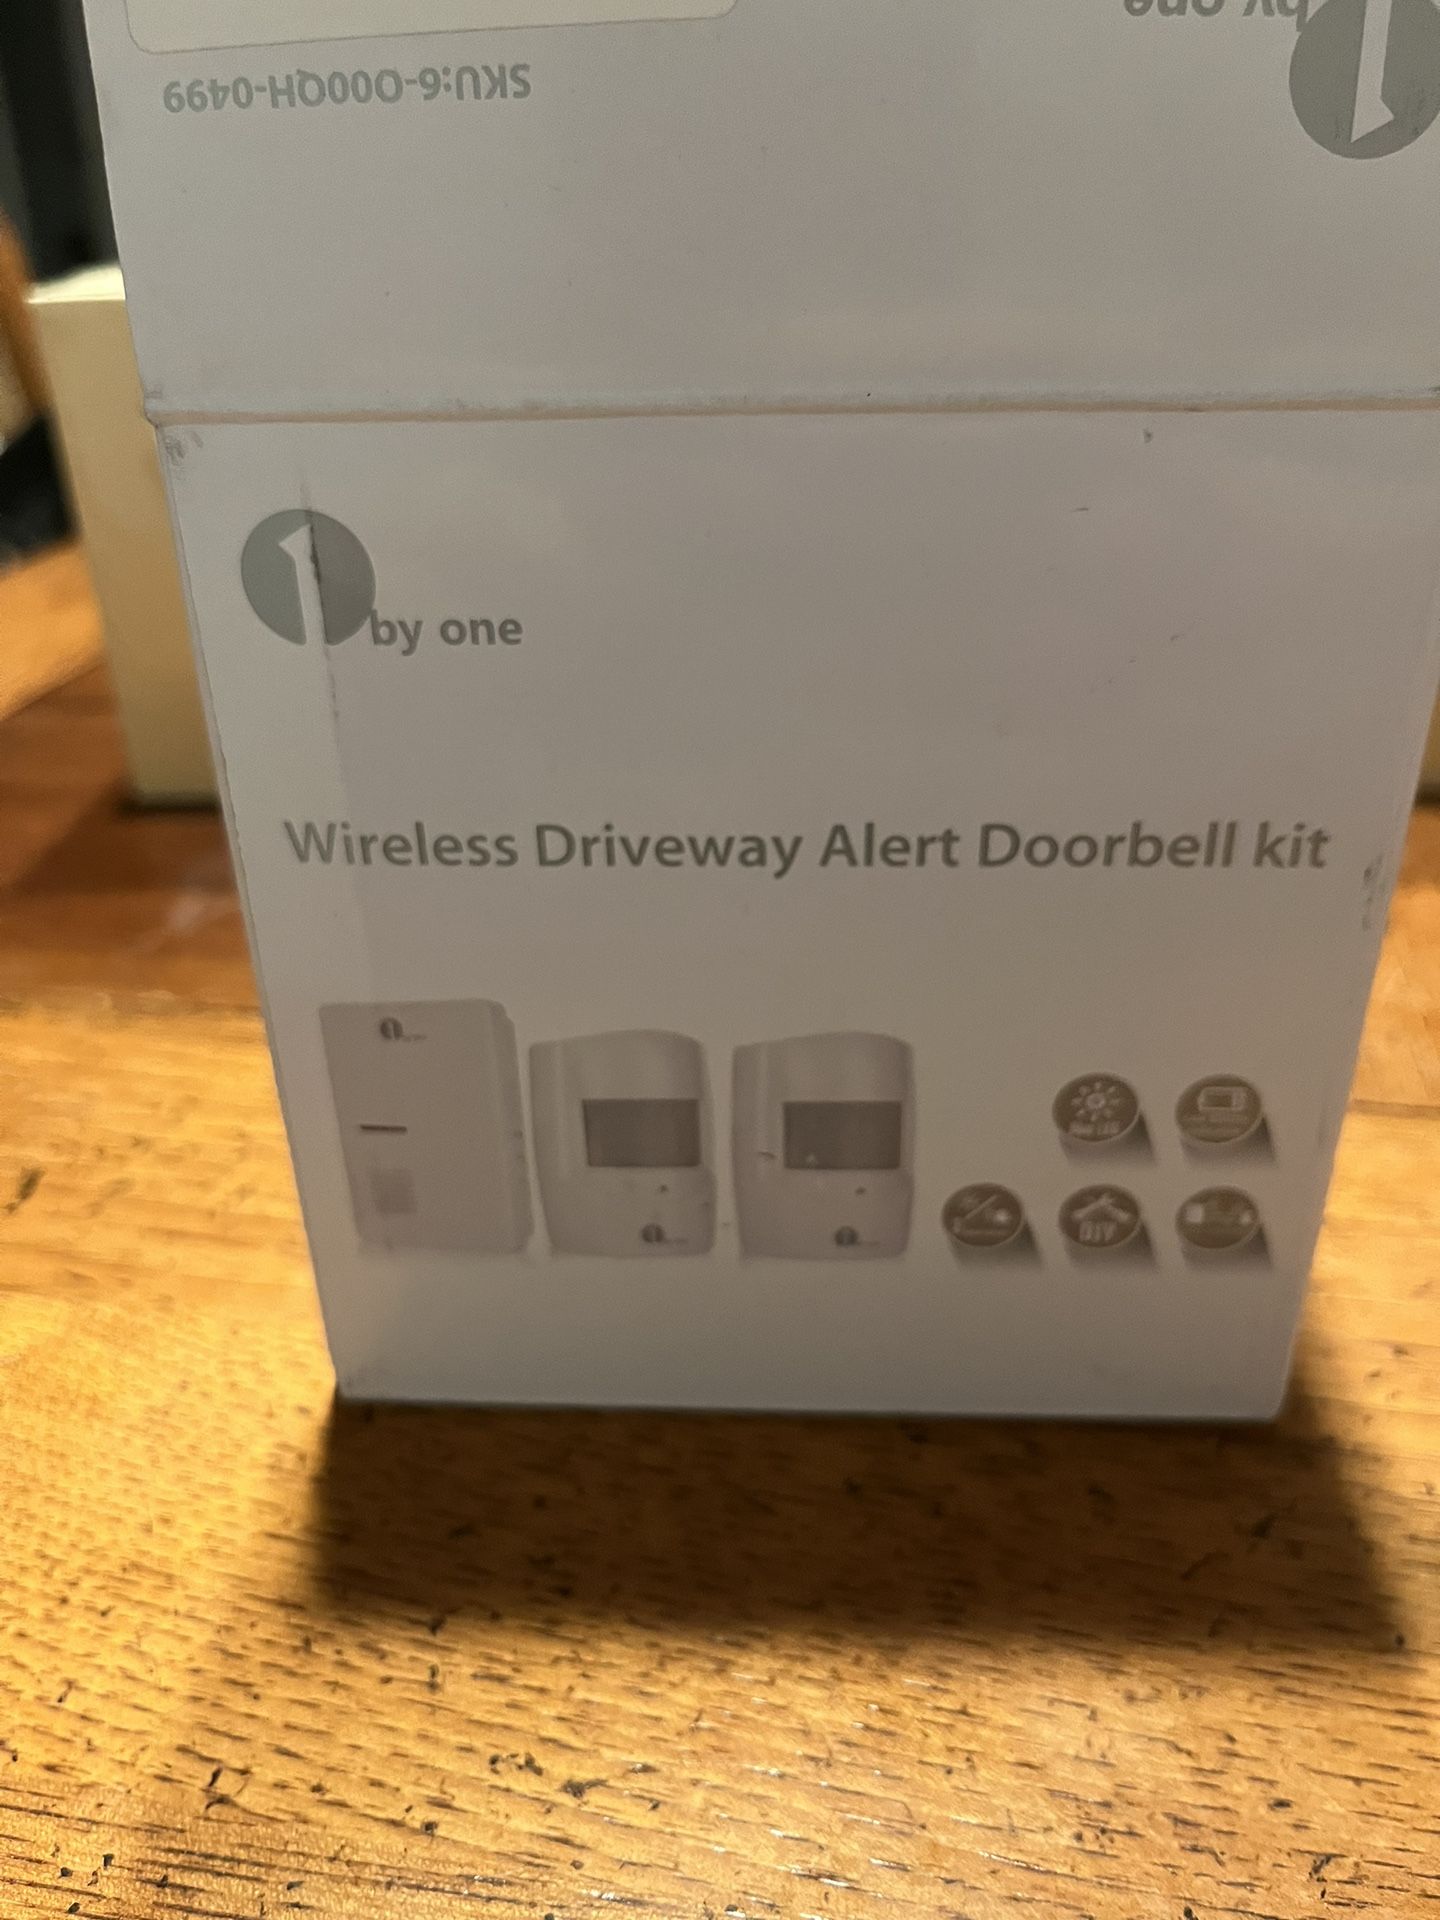 Wireless Driveway Alert Doorbell Kit